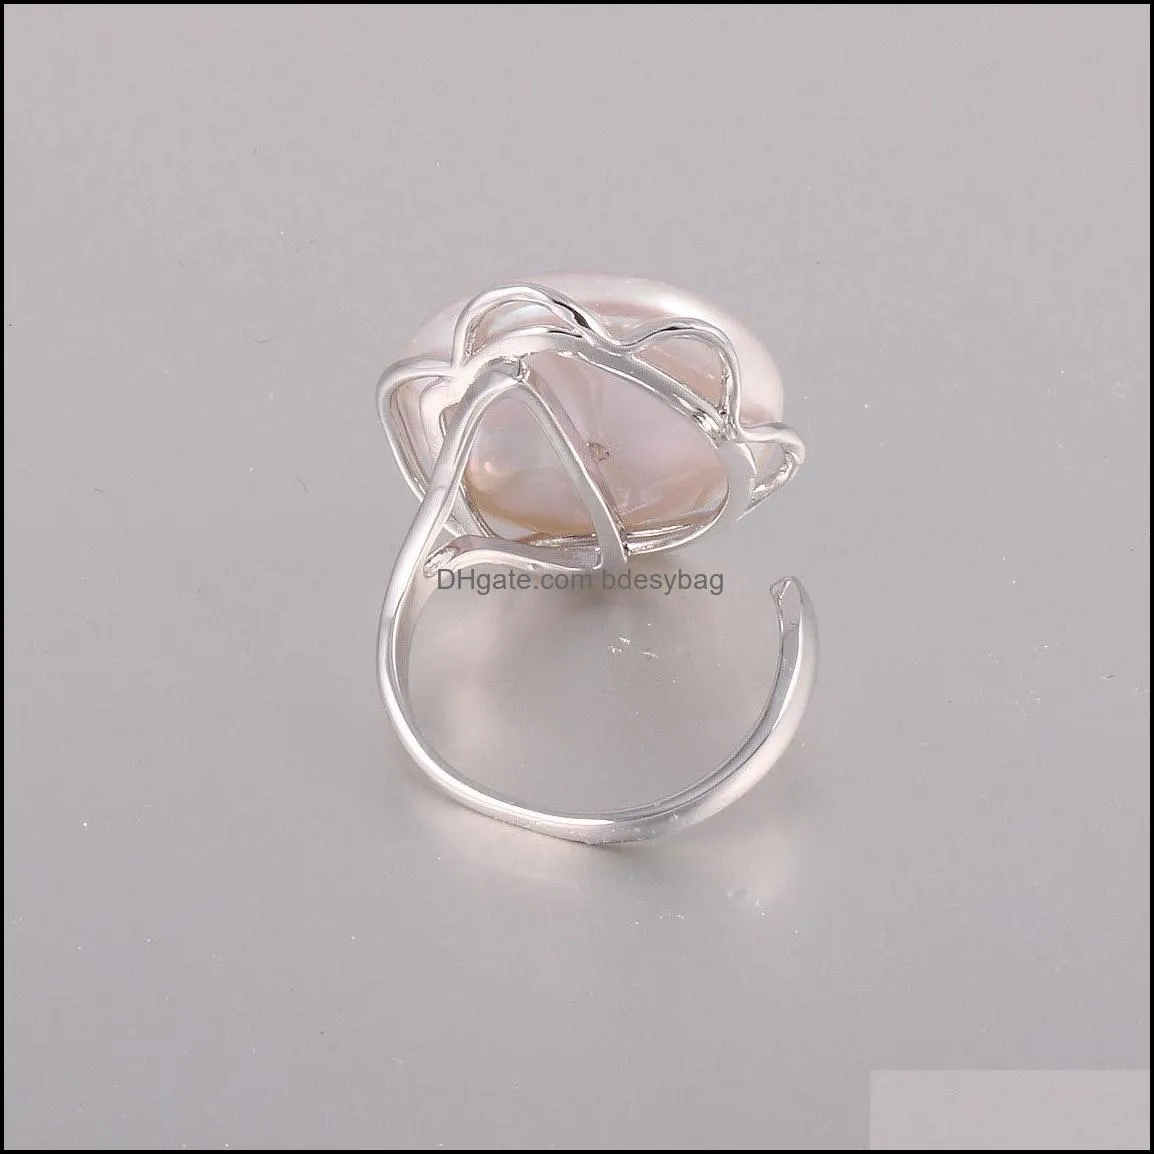 style copper base circular freshwater pearl ring for elegant women love romantic gift